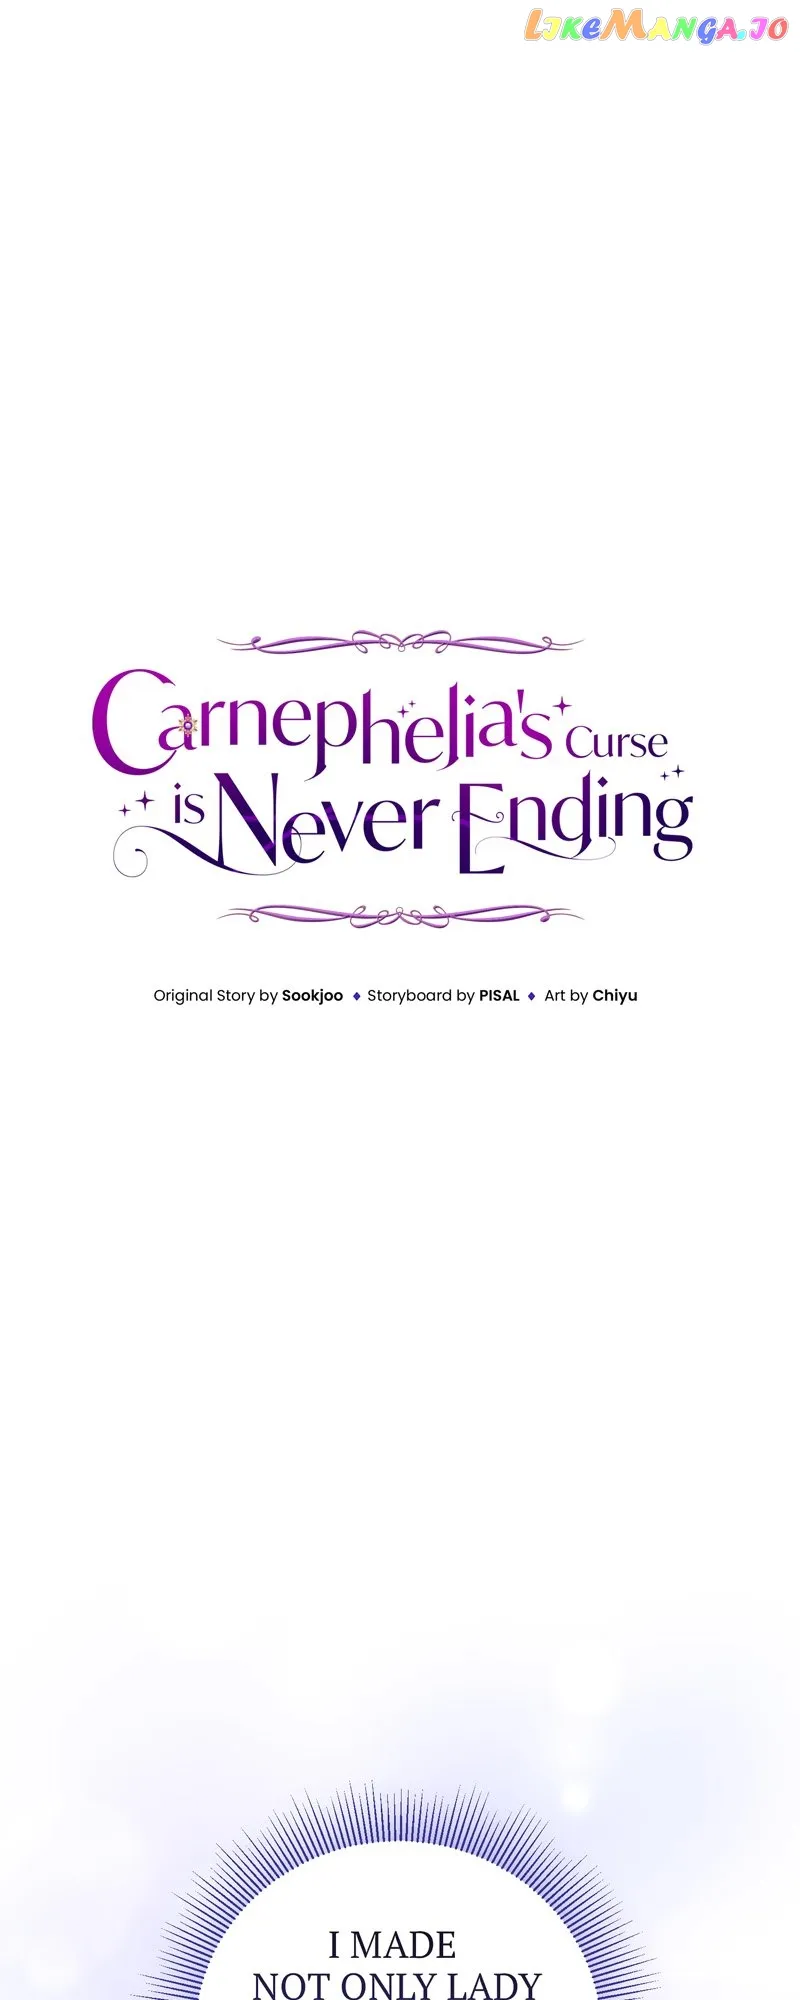 Carnephelia’s Curse is Never Ending chapter 30